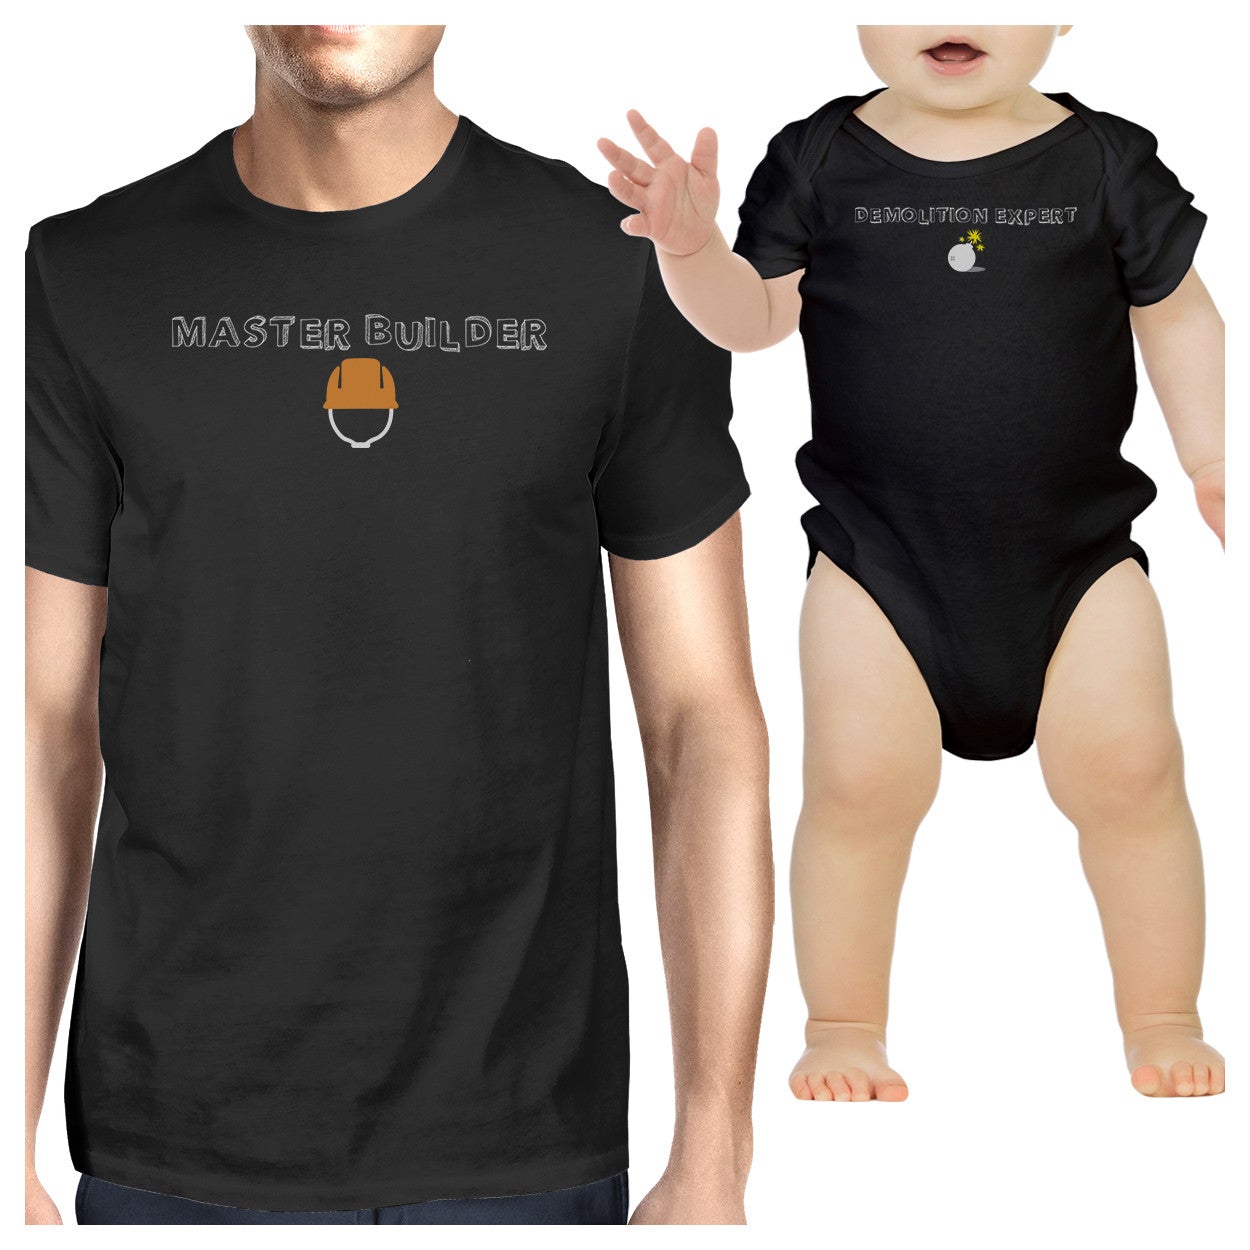 Master Builder Demolition Expert Dad and Baby Matching Black Shirts